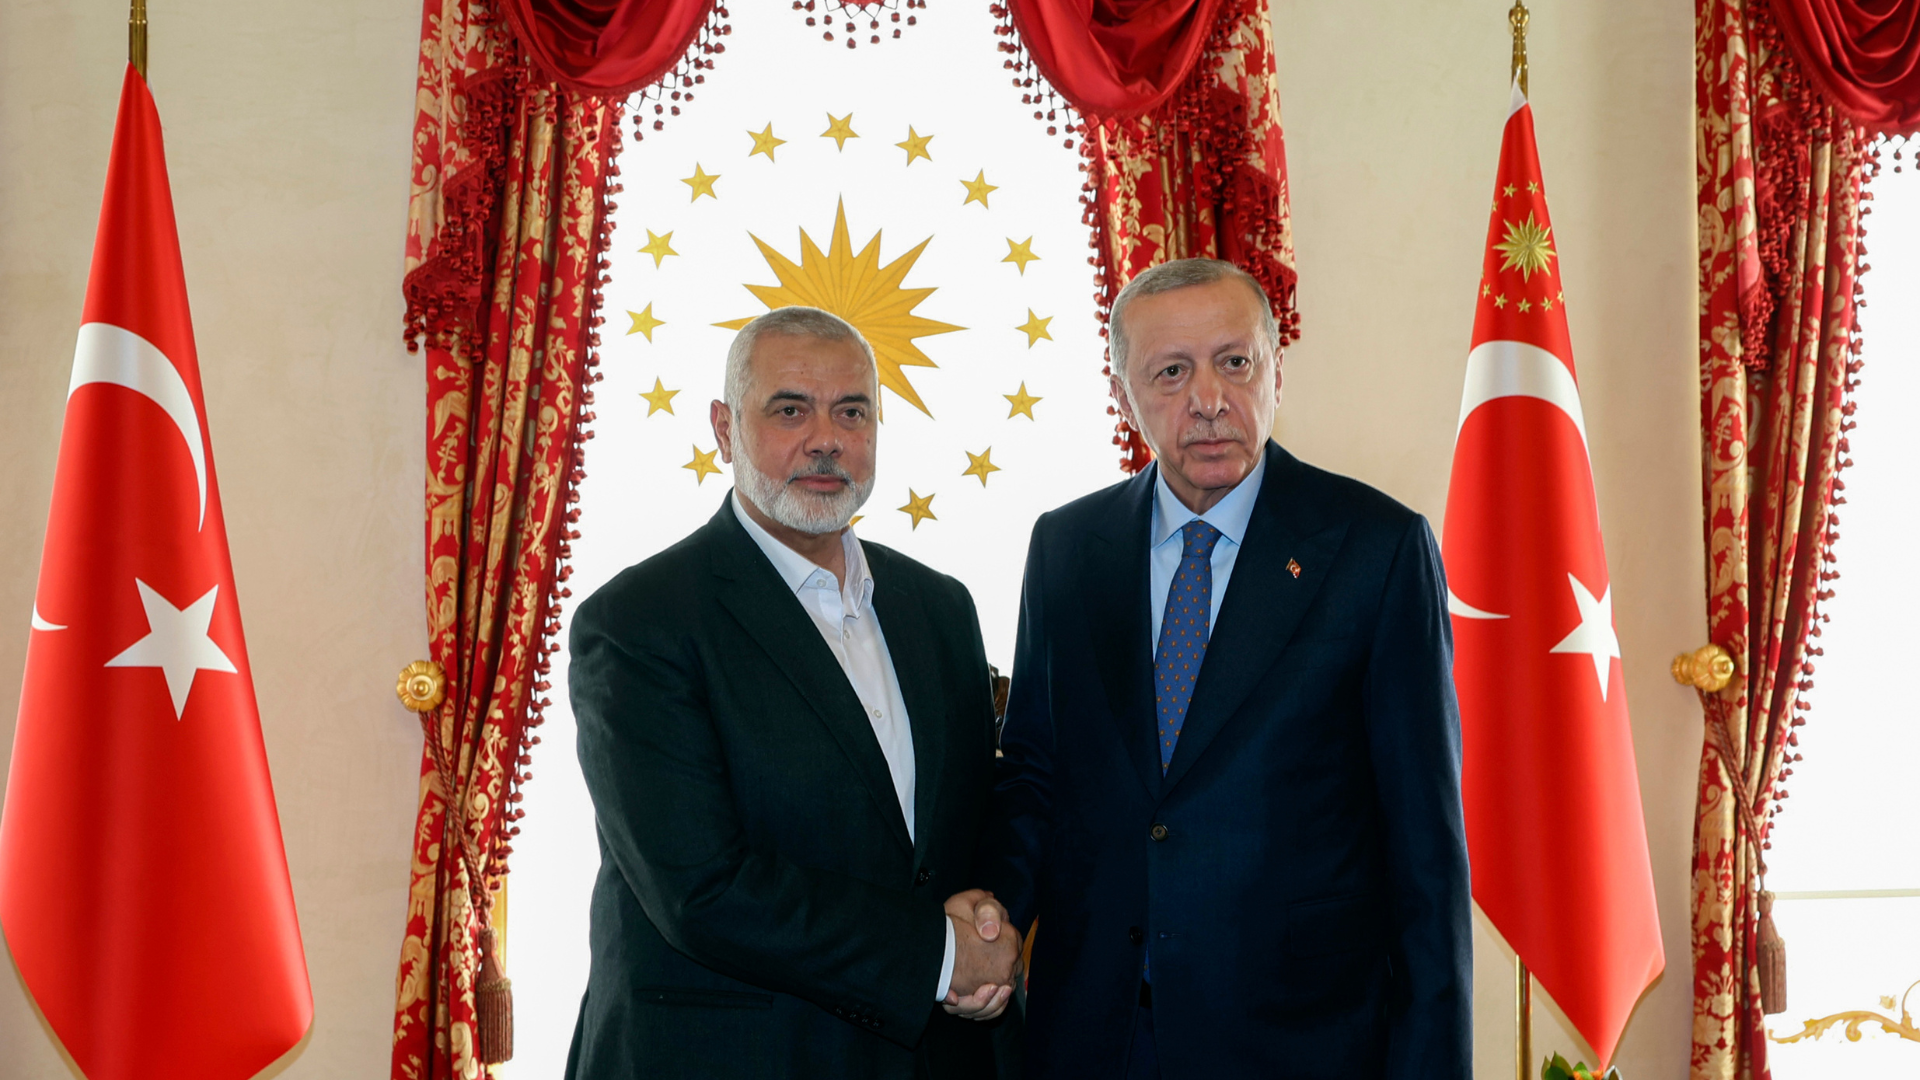 Turkey's President Recep Tayyip Erdogan, right, and Hamas leader Ismail Haniyeh, shake hands during their meeting in Istanbul. /Turkish Presidency via AP